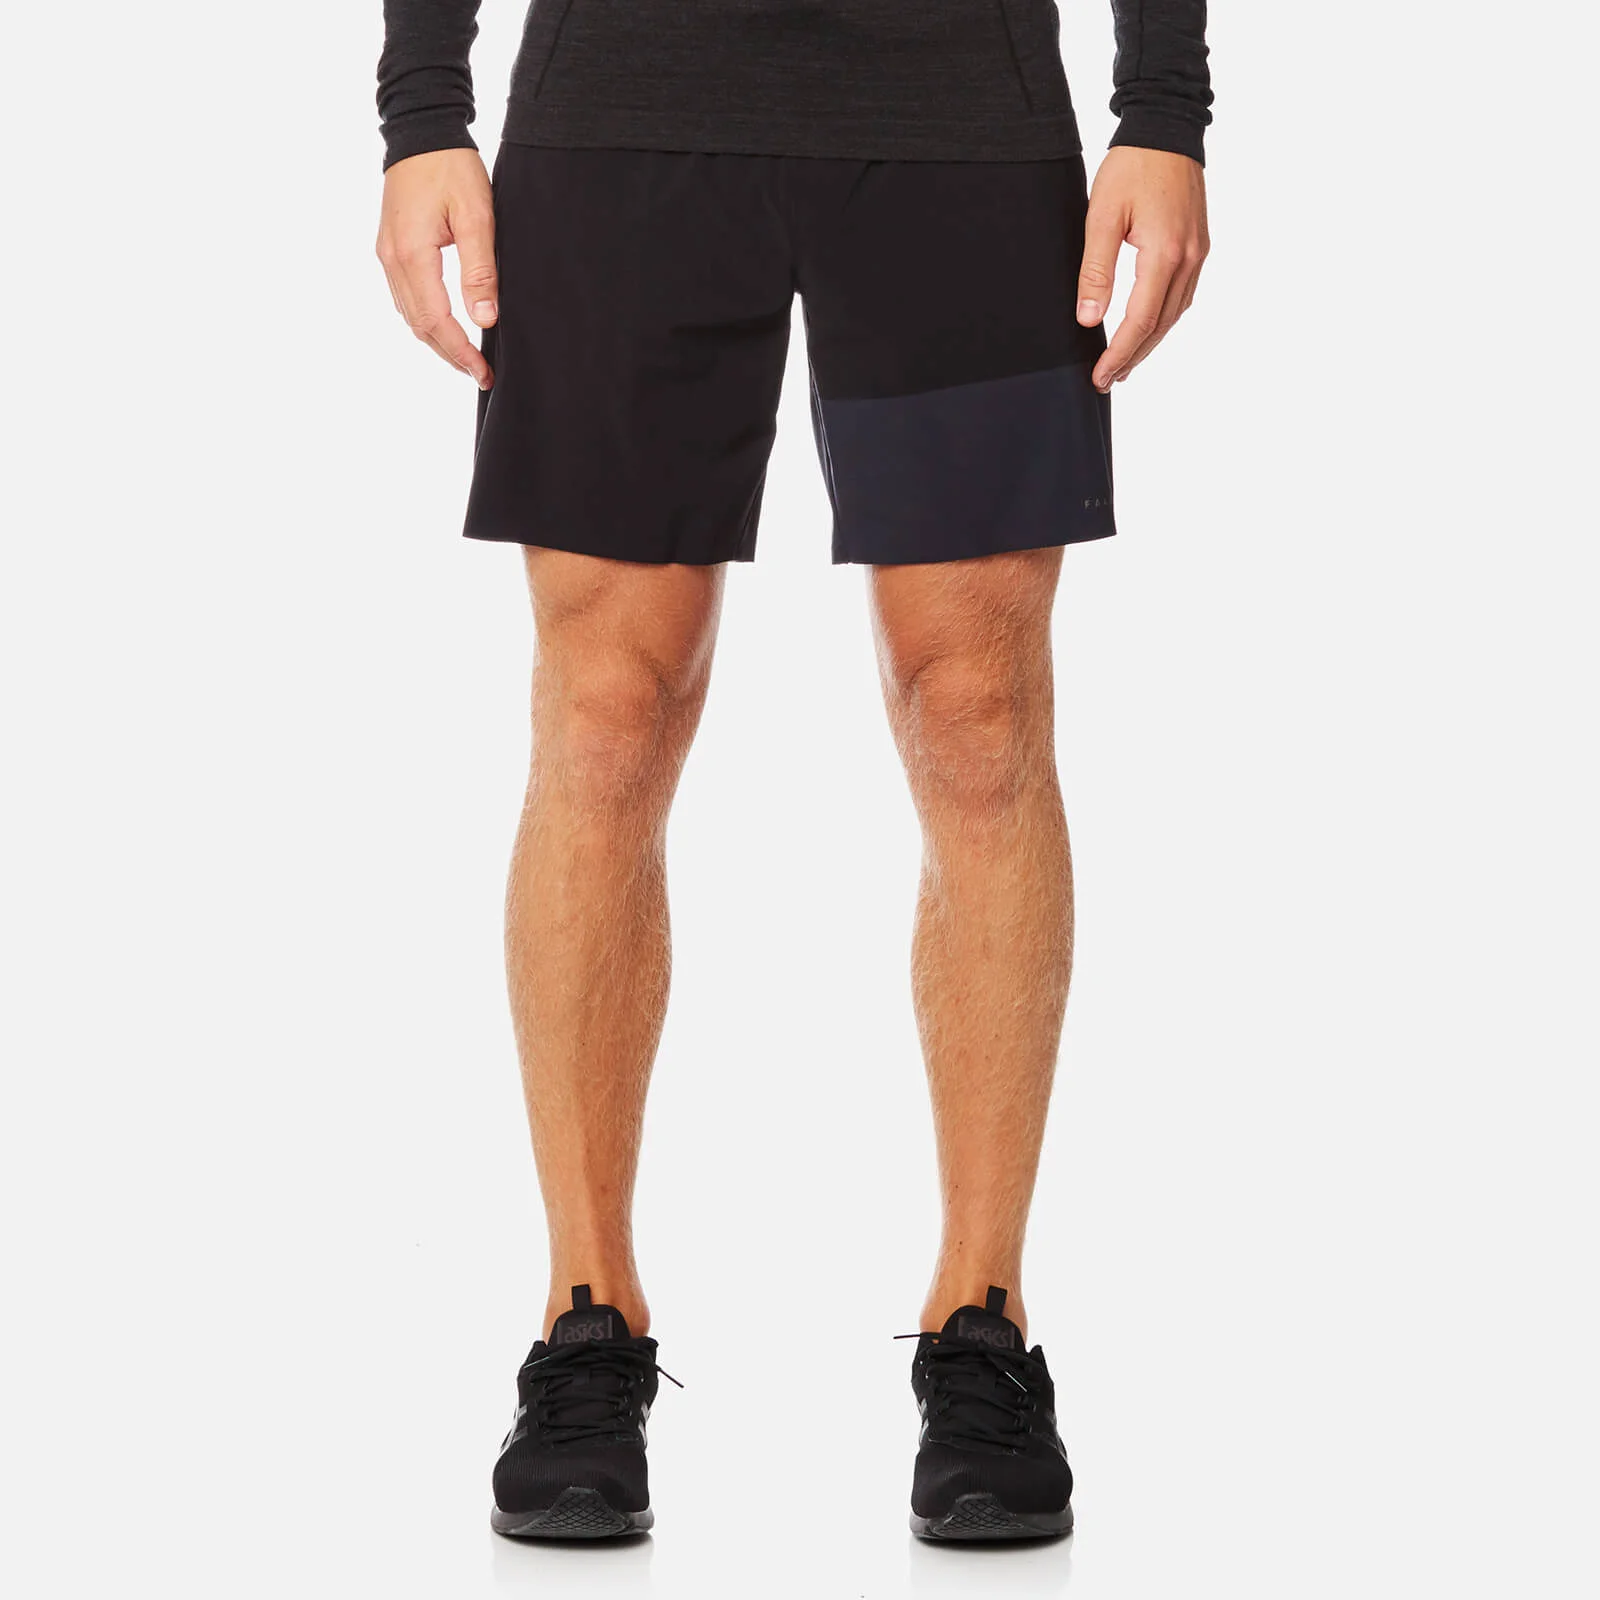 FALKE Ergonomic Sport System Men's Woven Performance Shorts - Black Image 1